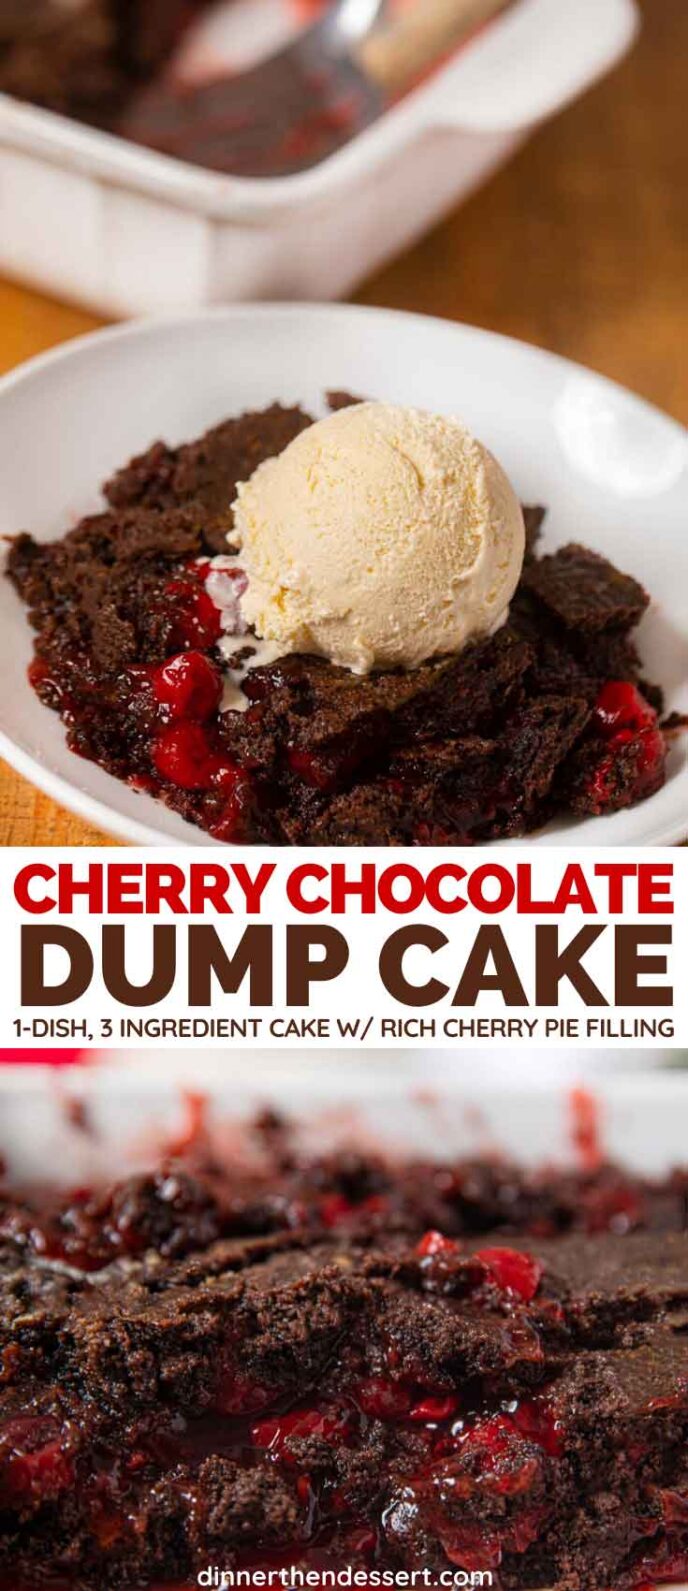 Cherry Chocolate Dump Cake collage